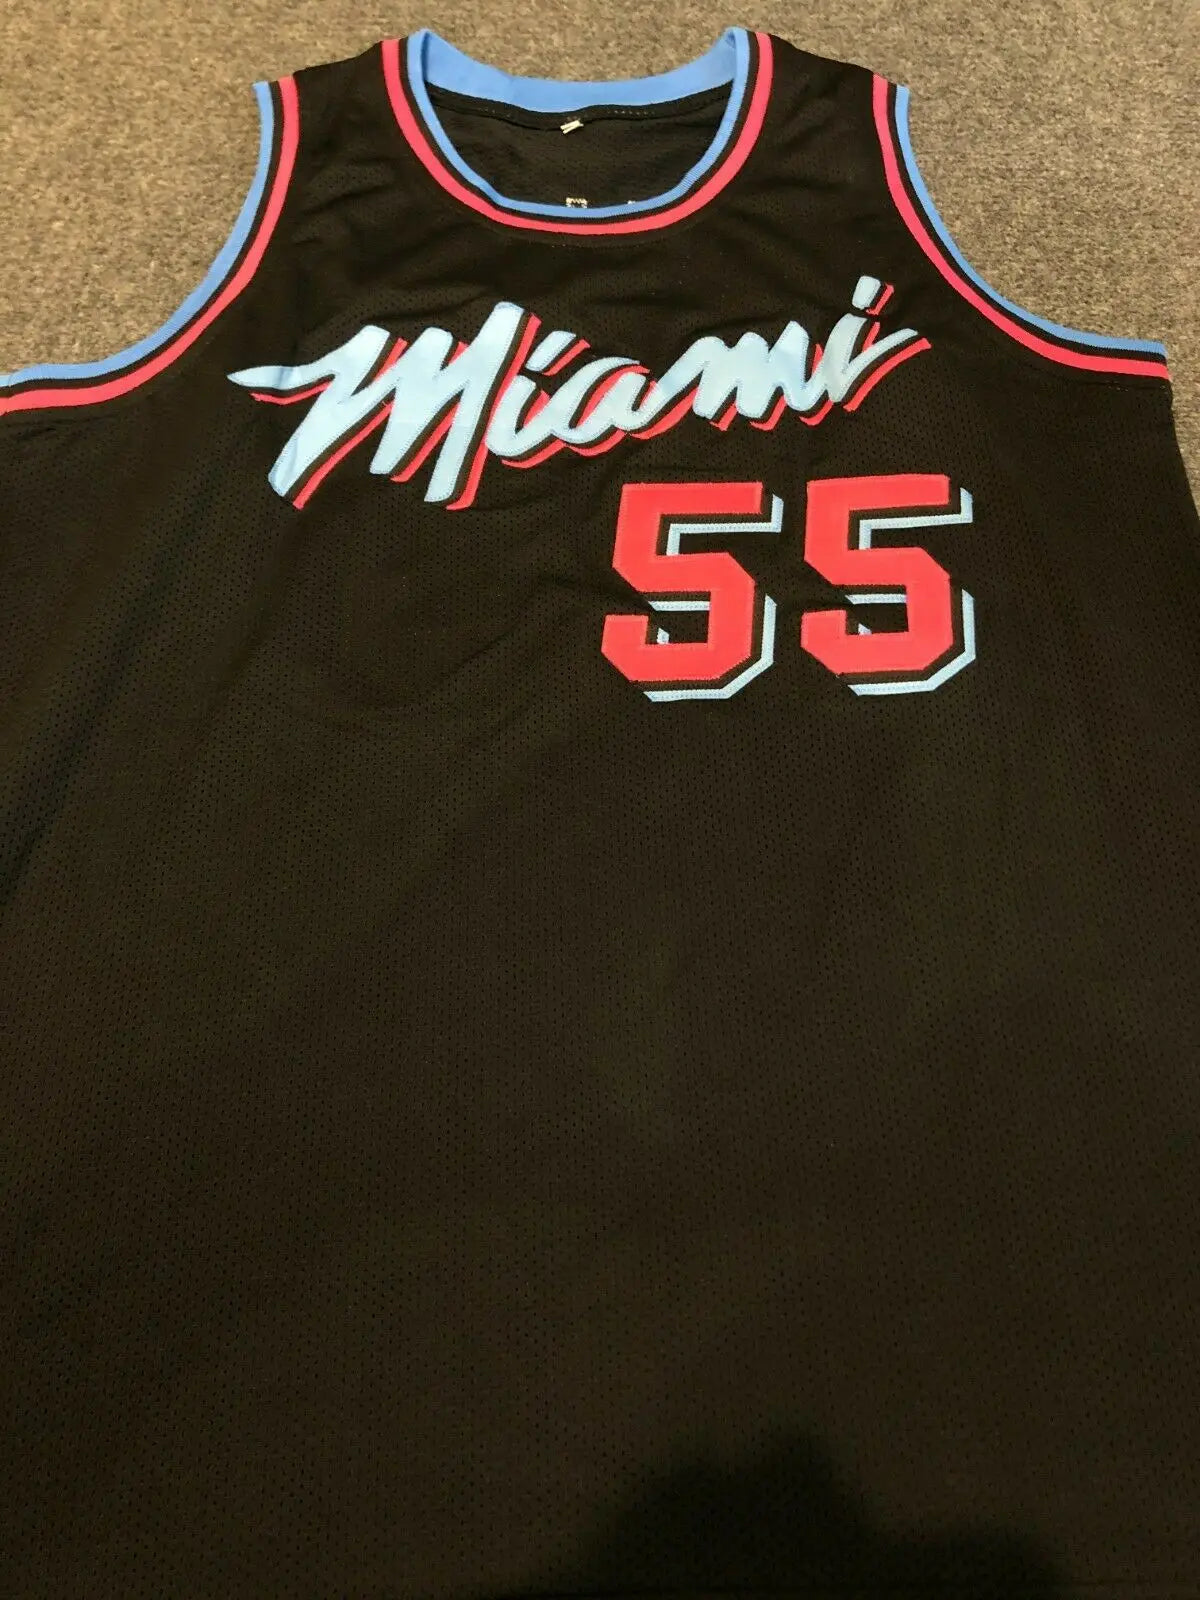 New Miami Heat Vice Jerseys Should Be Permanent